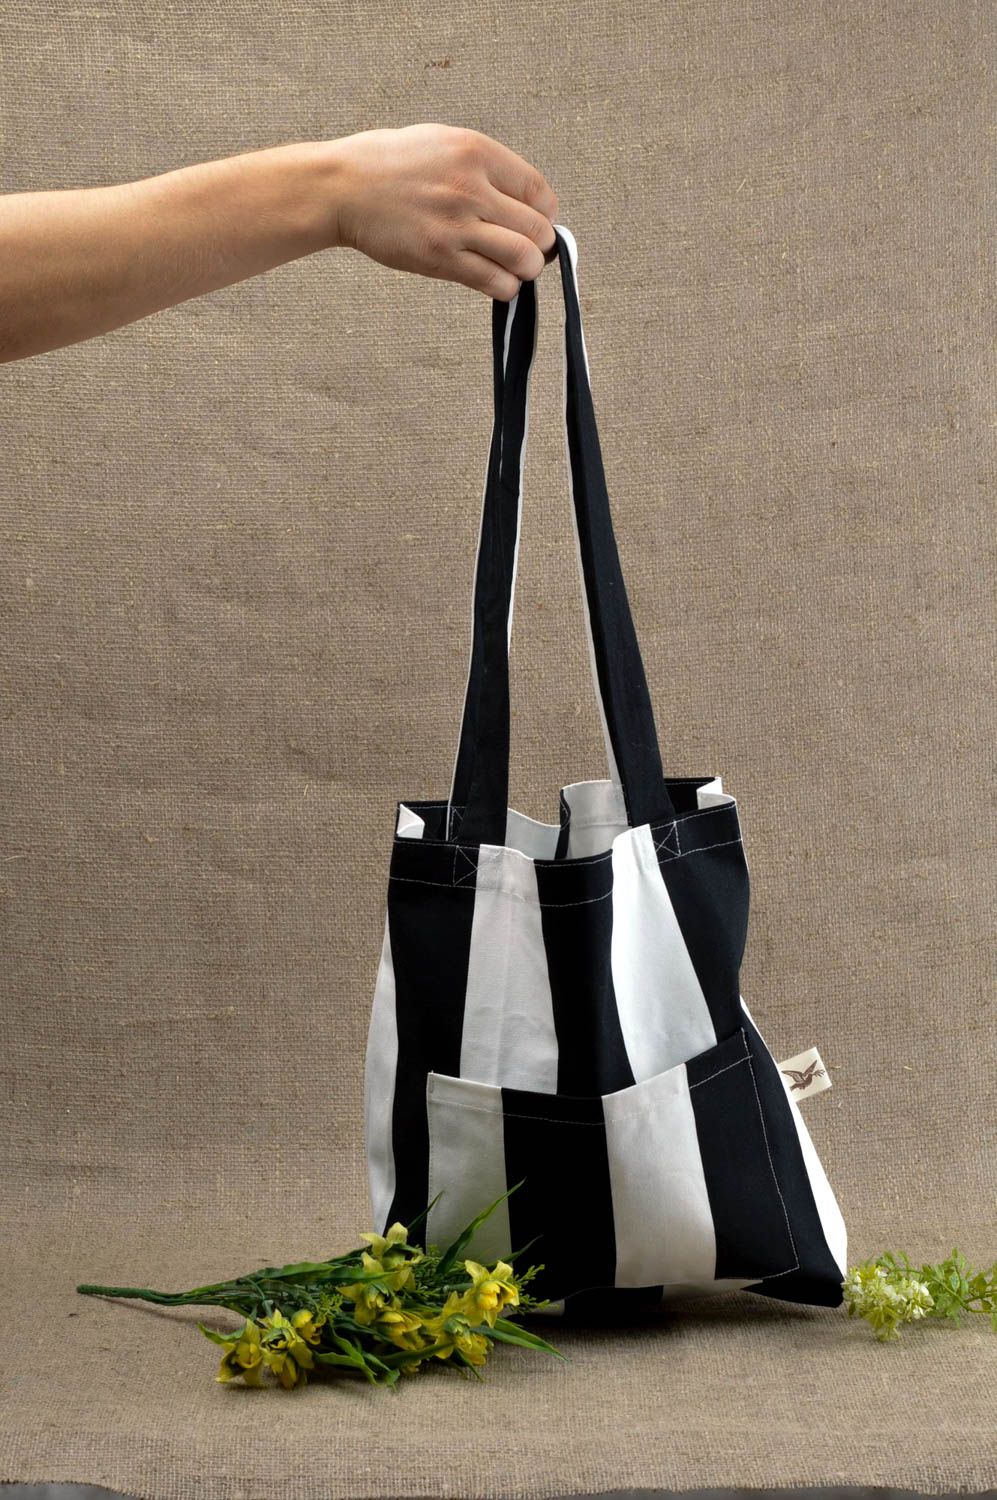 Handmade bag in casual style textile designer bag beautiful bag for women photo 1